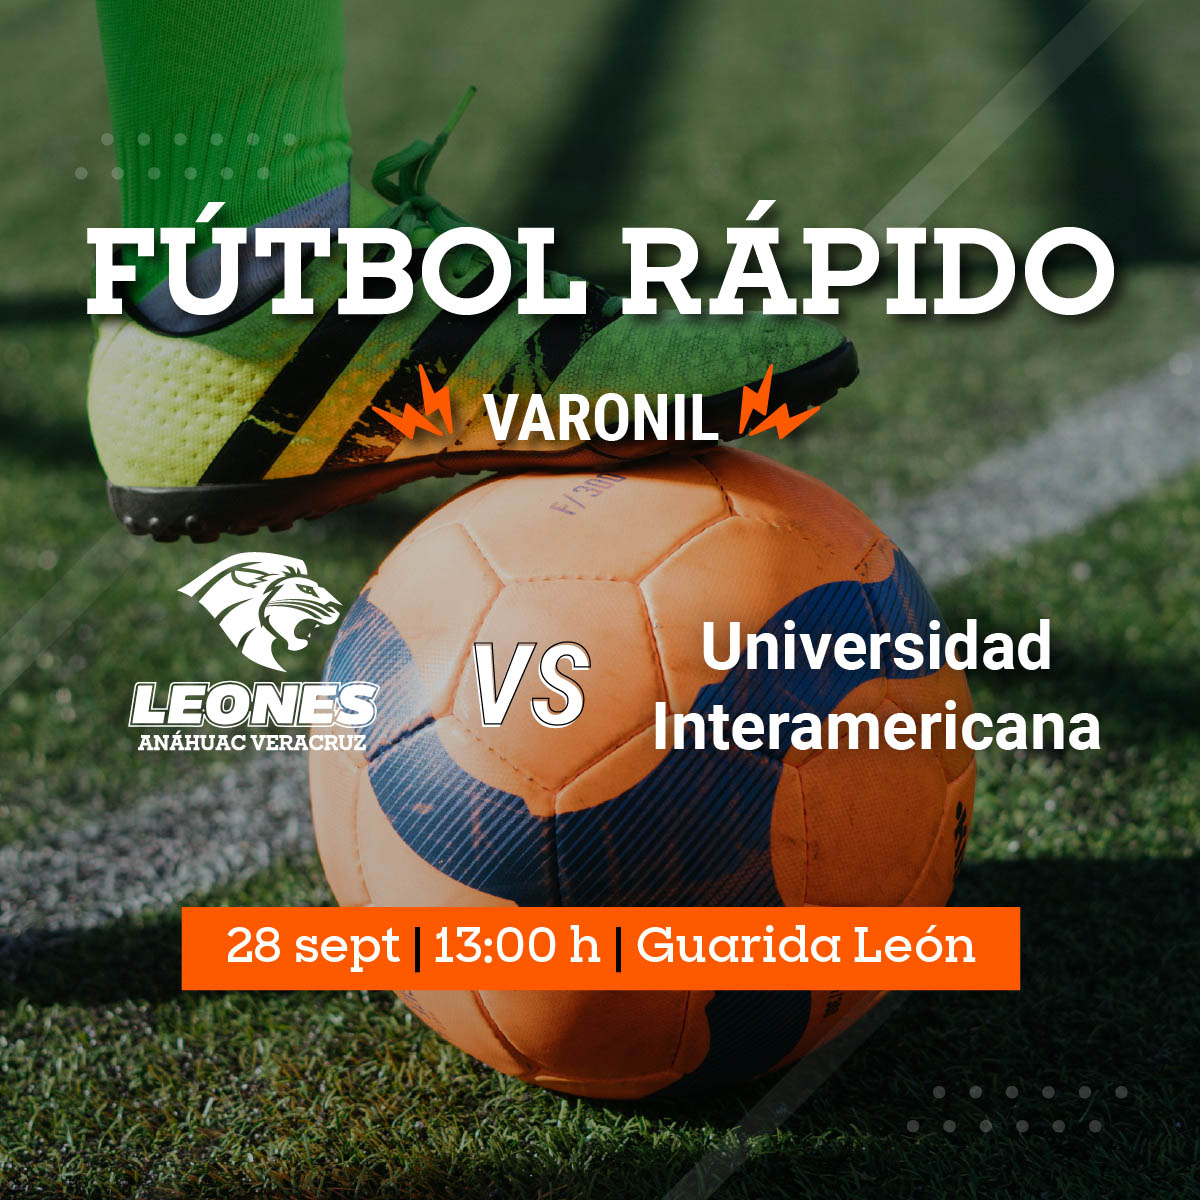 Fútbol Rápido Varonil: Leones vs Interamericana